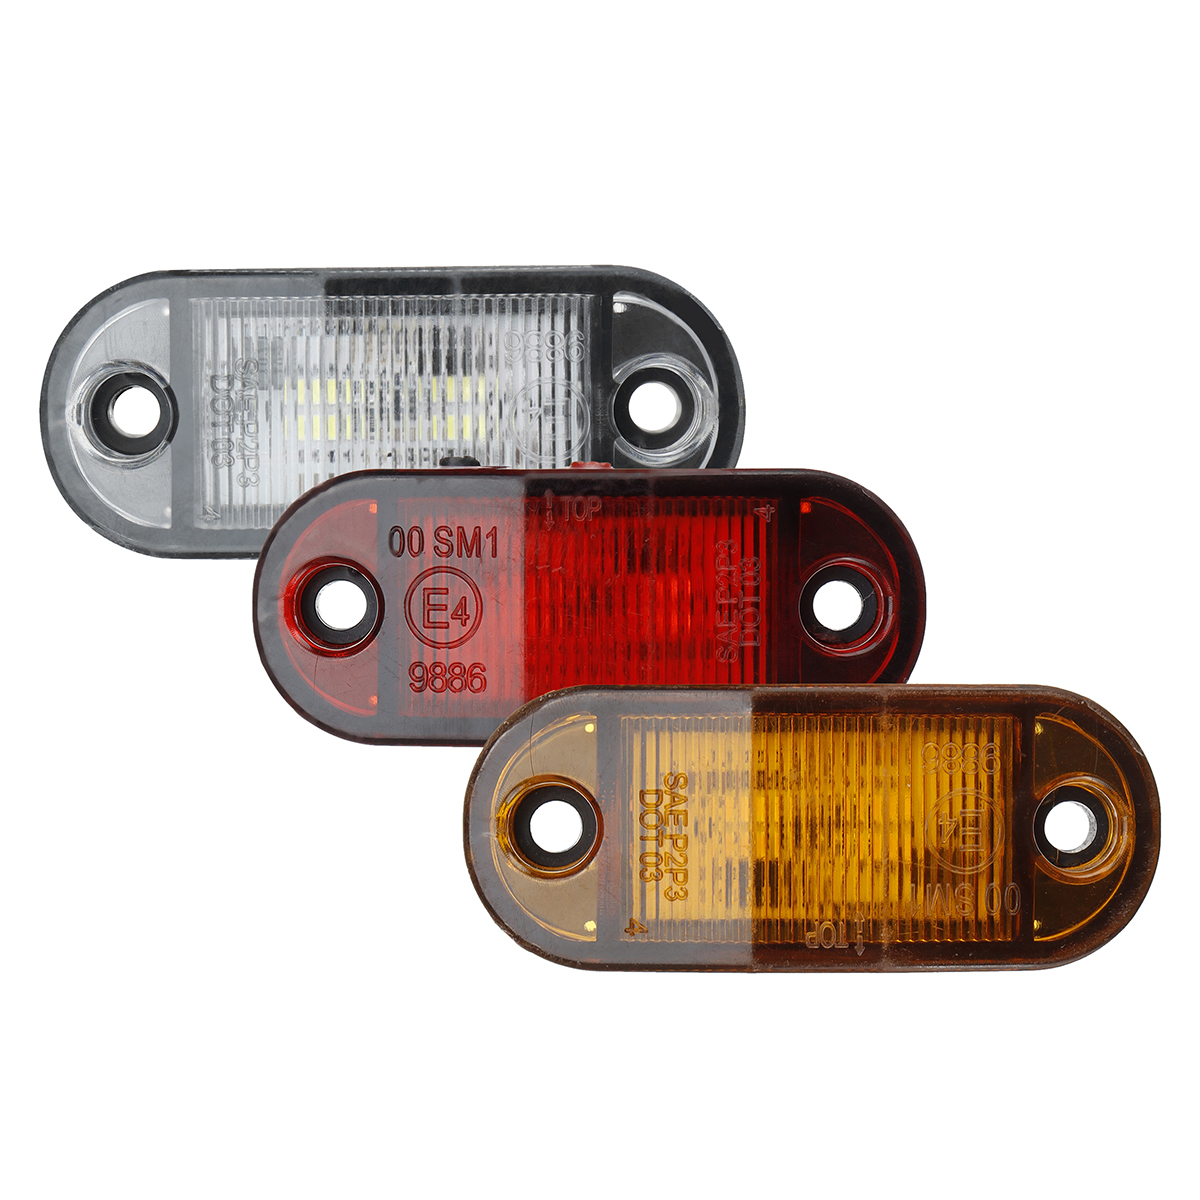 Red/White/ Amber/ 12-24V 4LED Truck Side Marker Lights Trailer Clearance Tractor Van Side Lamp